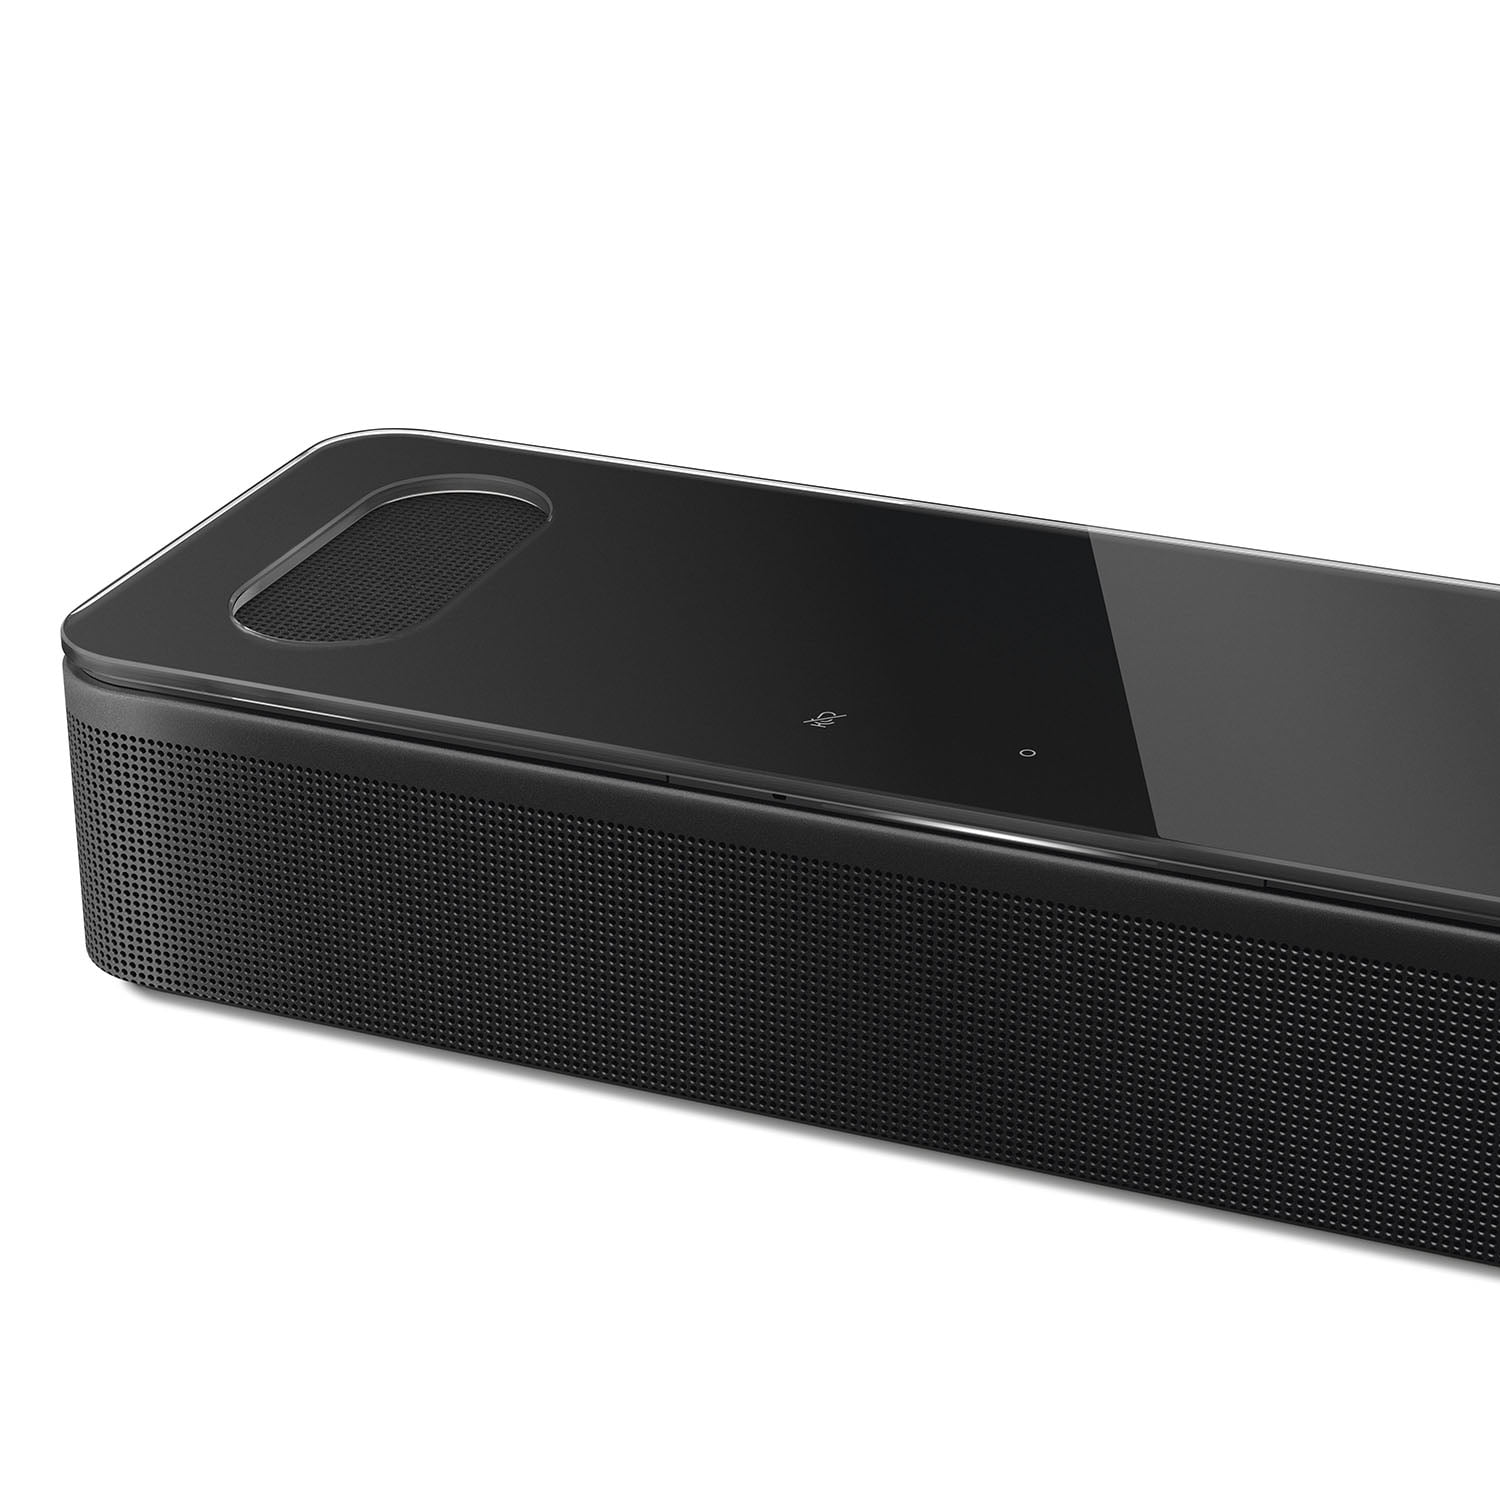 Bose Smart Soundbar 900 TV Wireless Bluetooth Surround Sound Speaker  System, Black